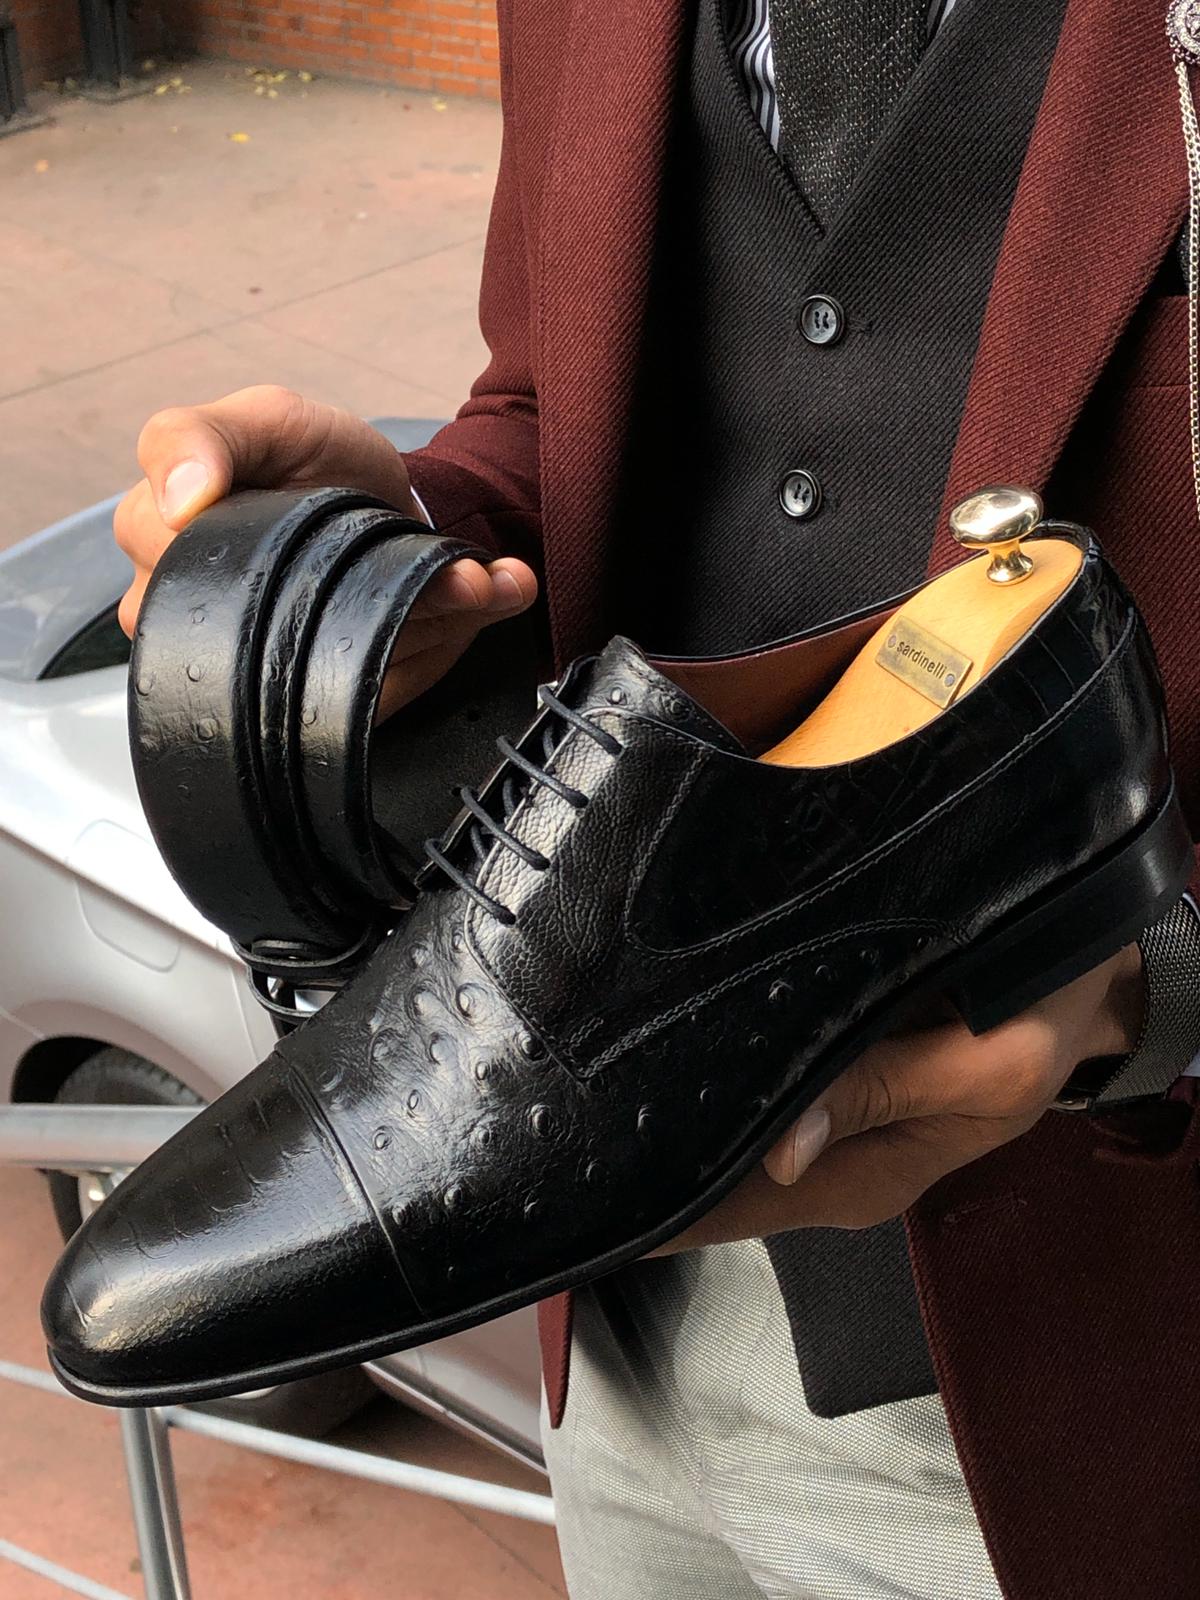 Sardinelli Classic Leather Shoes Black-baagr.myshopify.com-shoes2-BOJONI